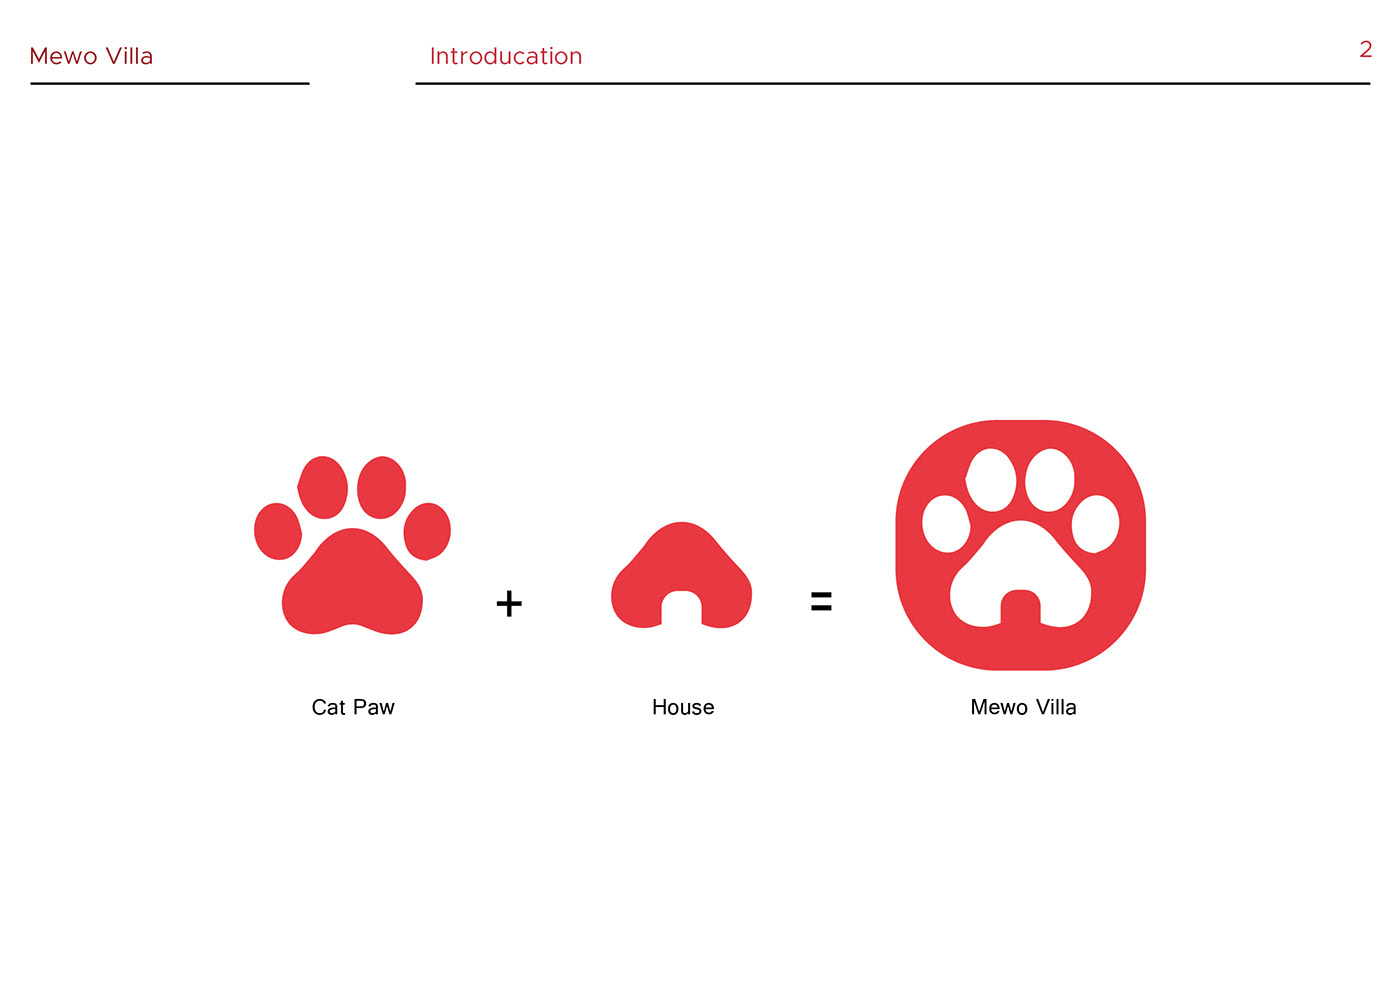 adoption Branding design catbranding Logo Design Pet petbranding pethouse petshelter petshop shelter